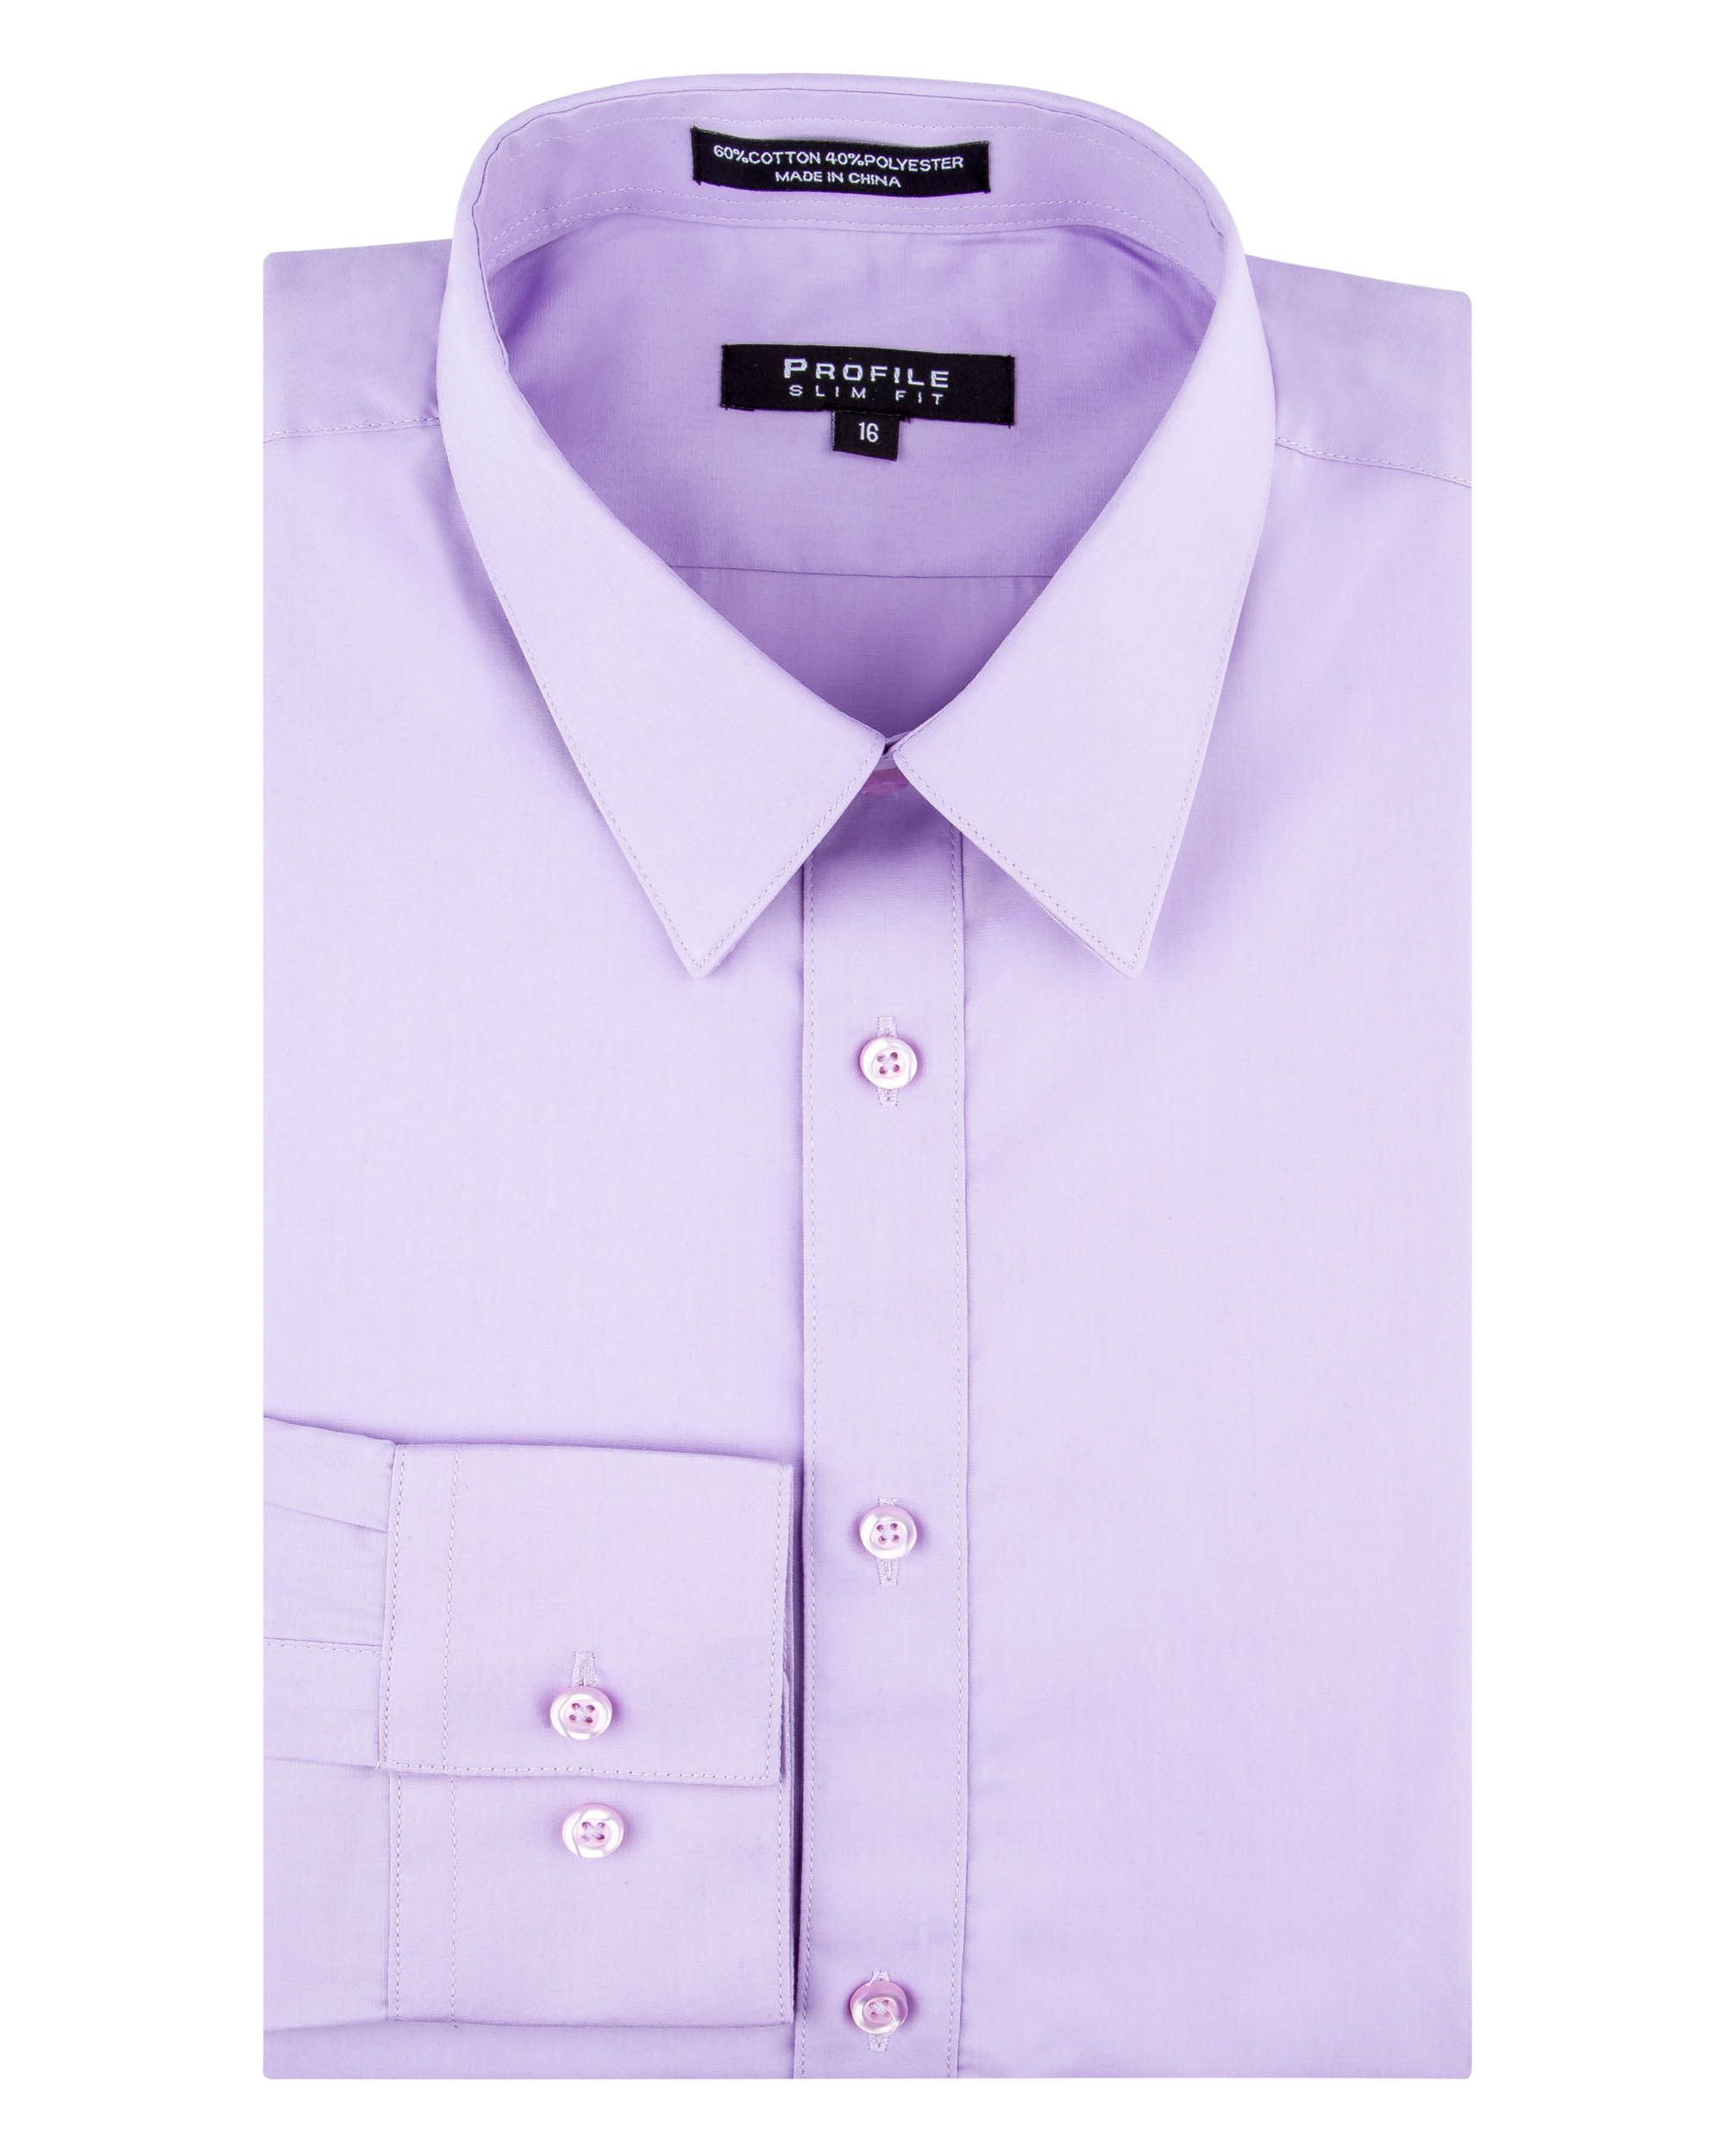 Profile Slim Fit Lavender Dress Shirt